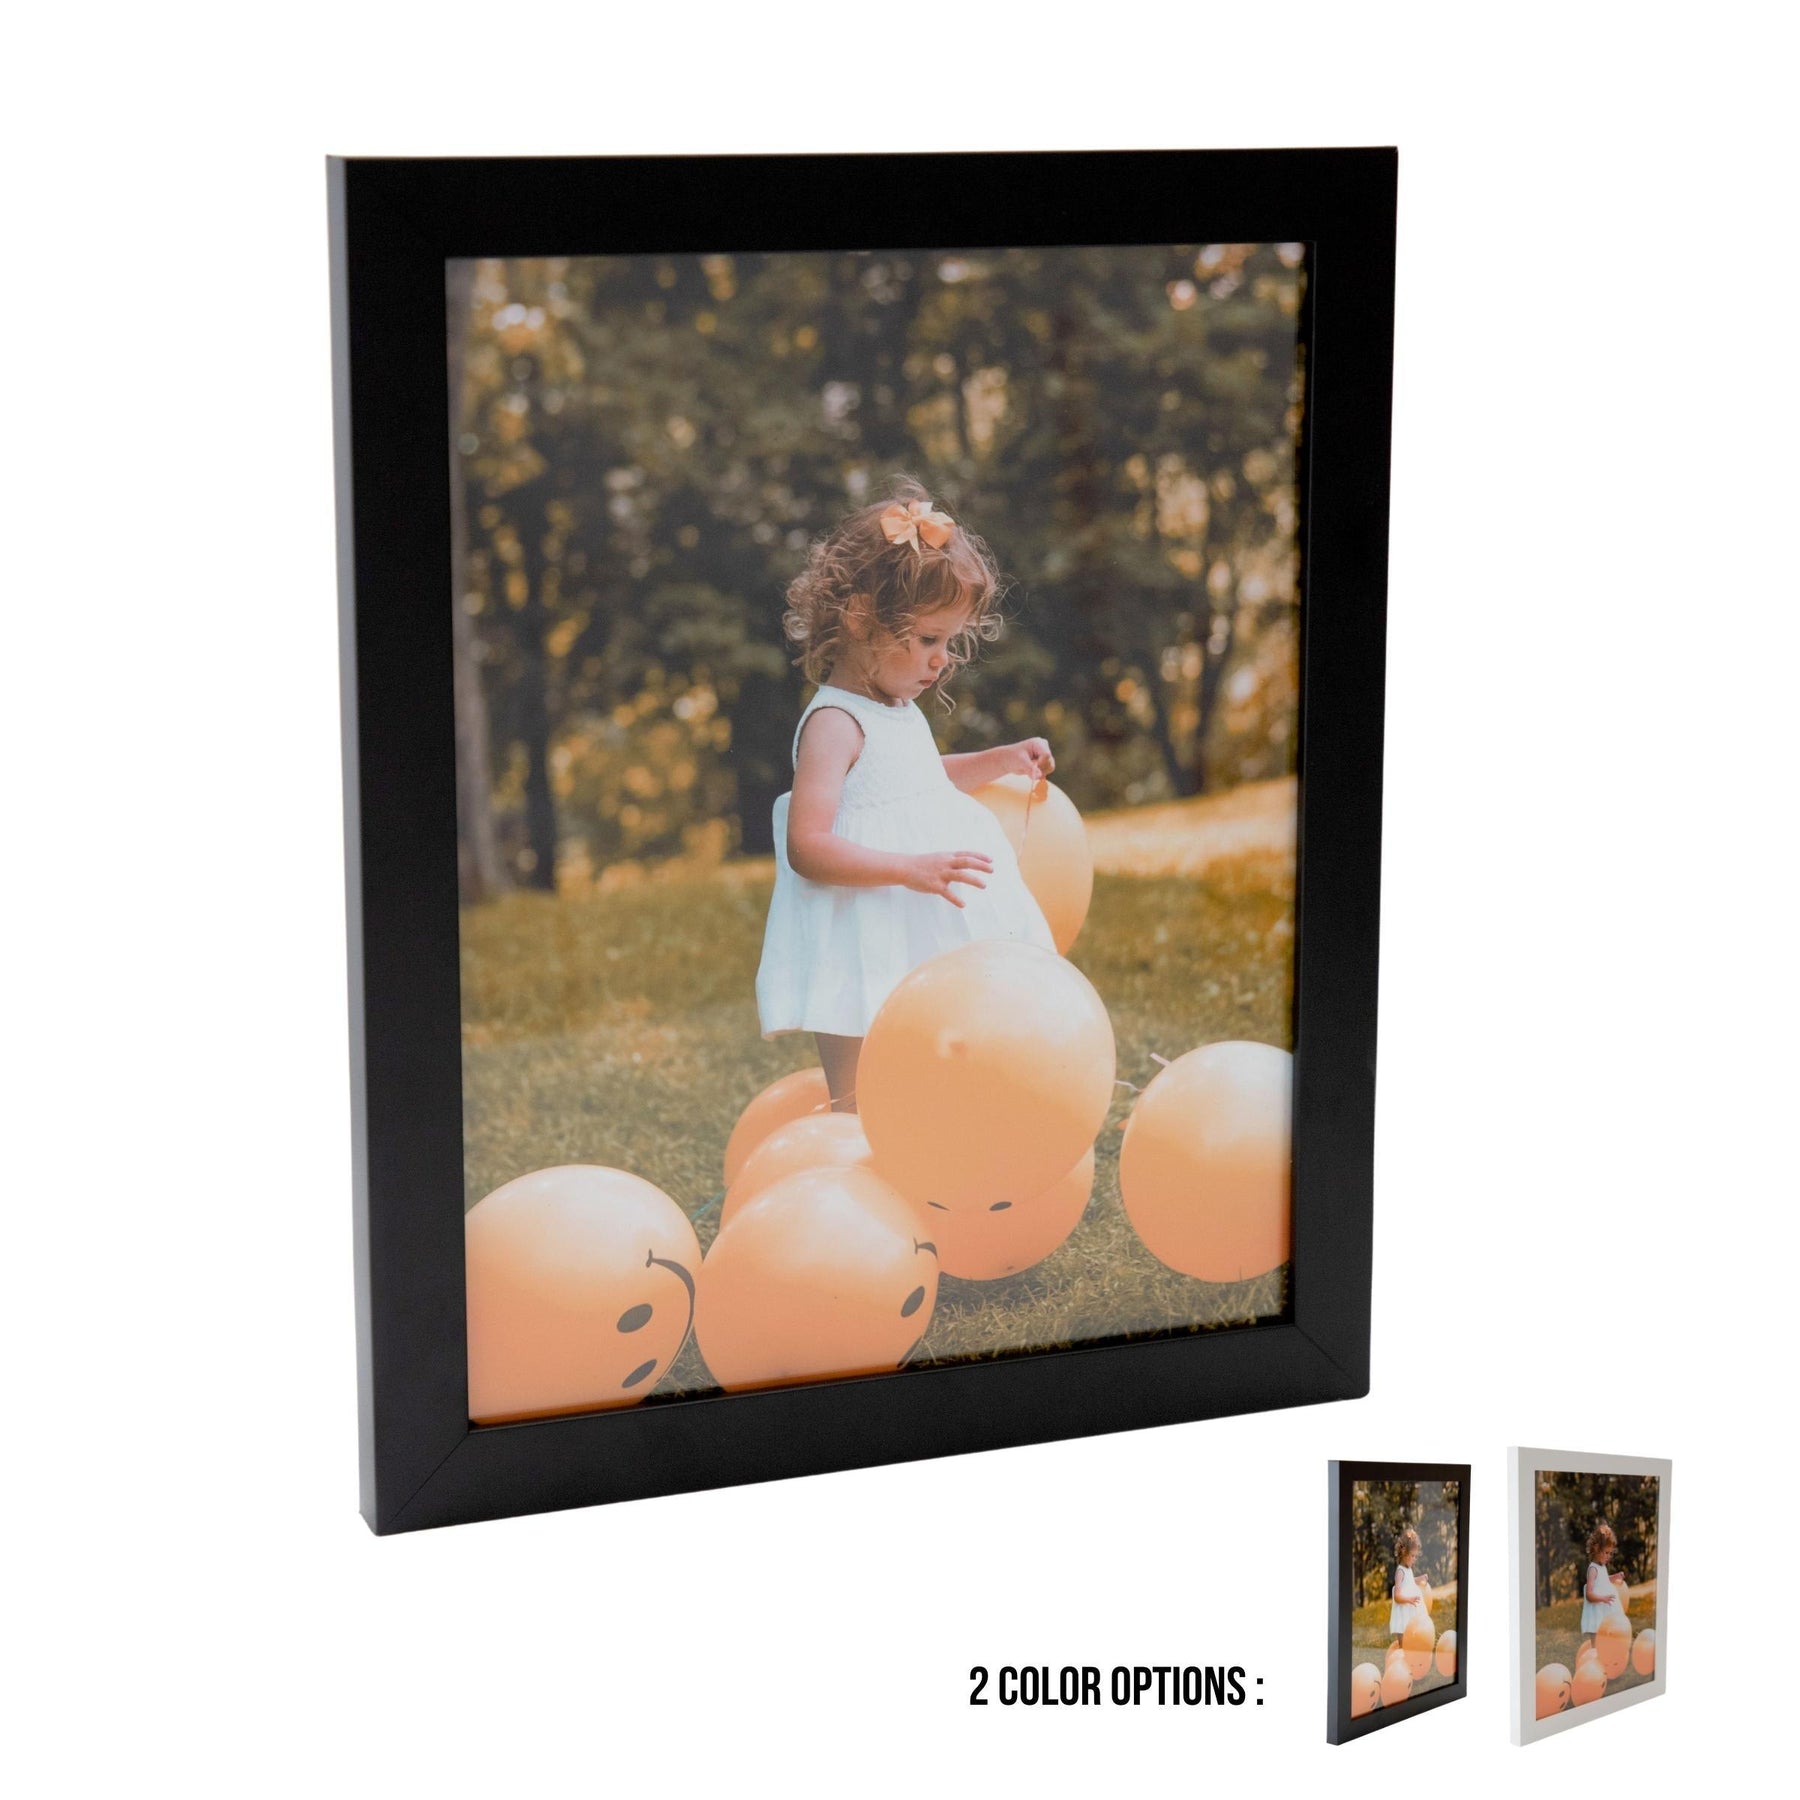 Bergen county picture frame shop for custom framing - Modern Memory Design Picture frames - NJ Frame shop Custom framing